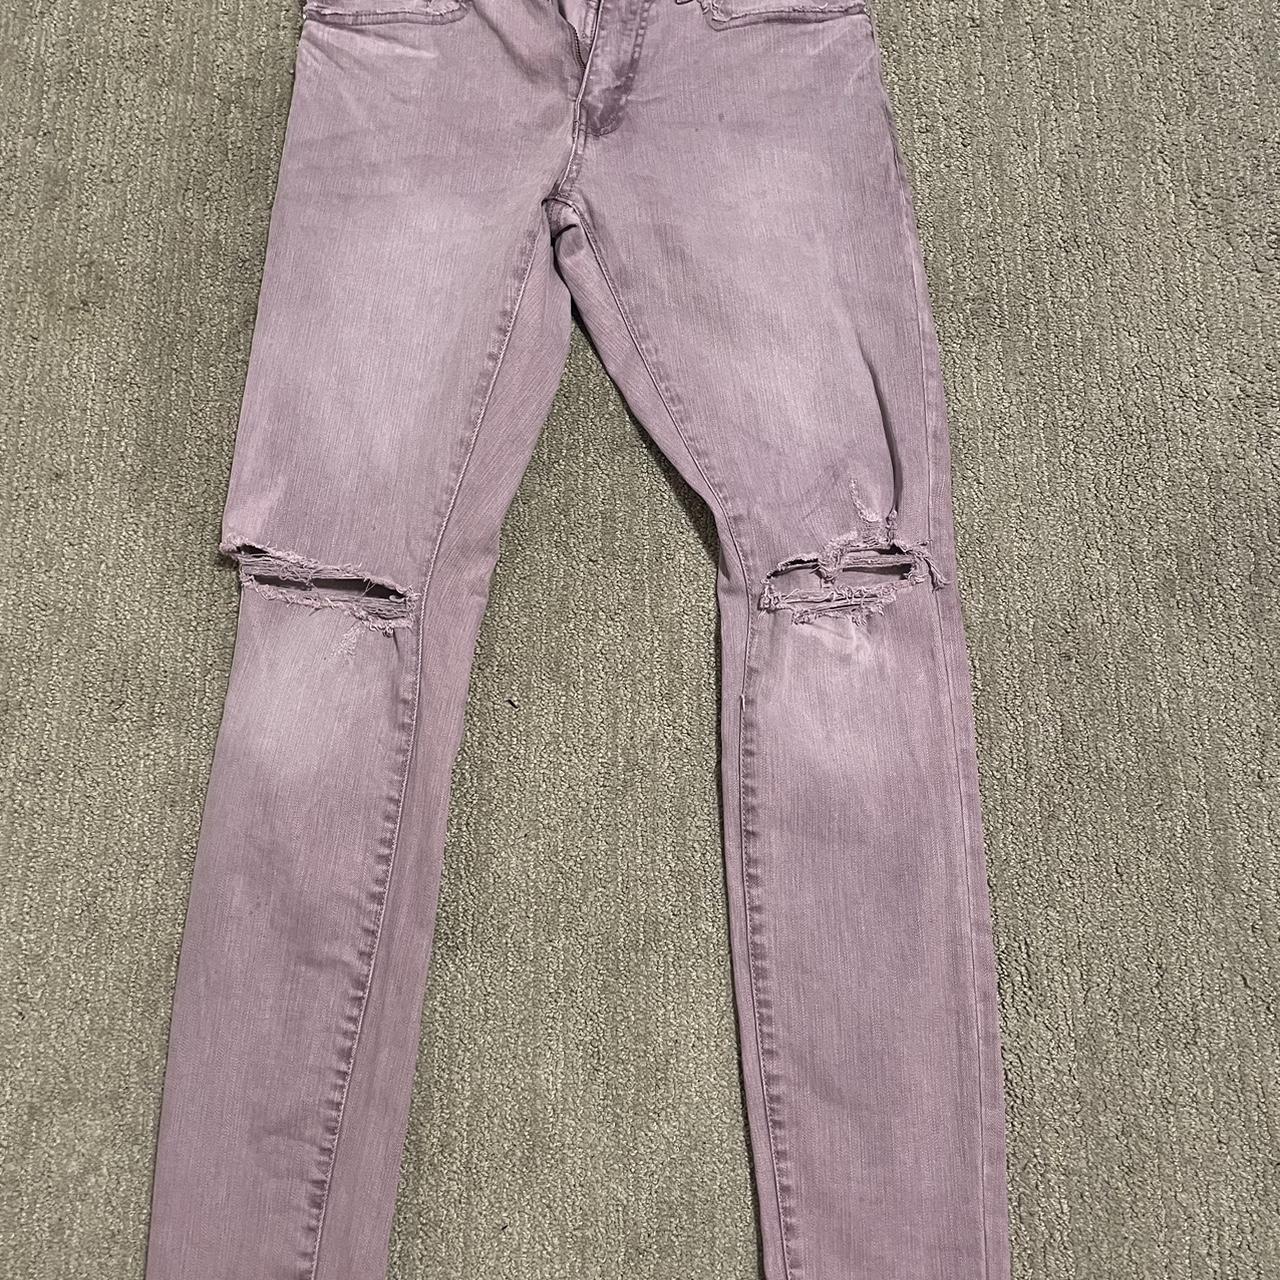 Men's Purple Jeans